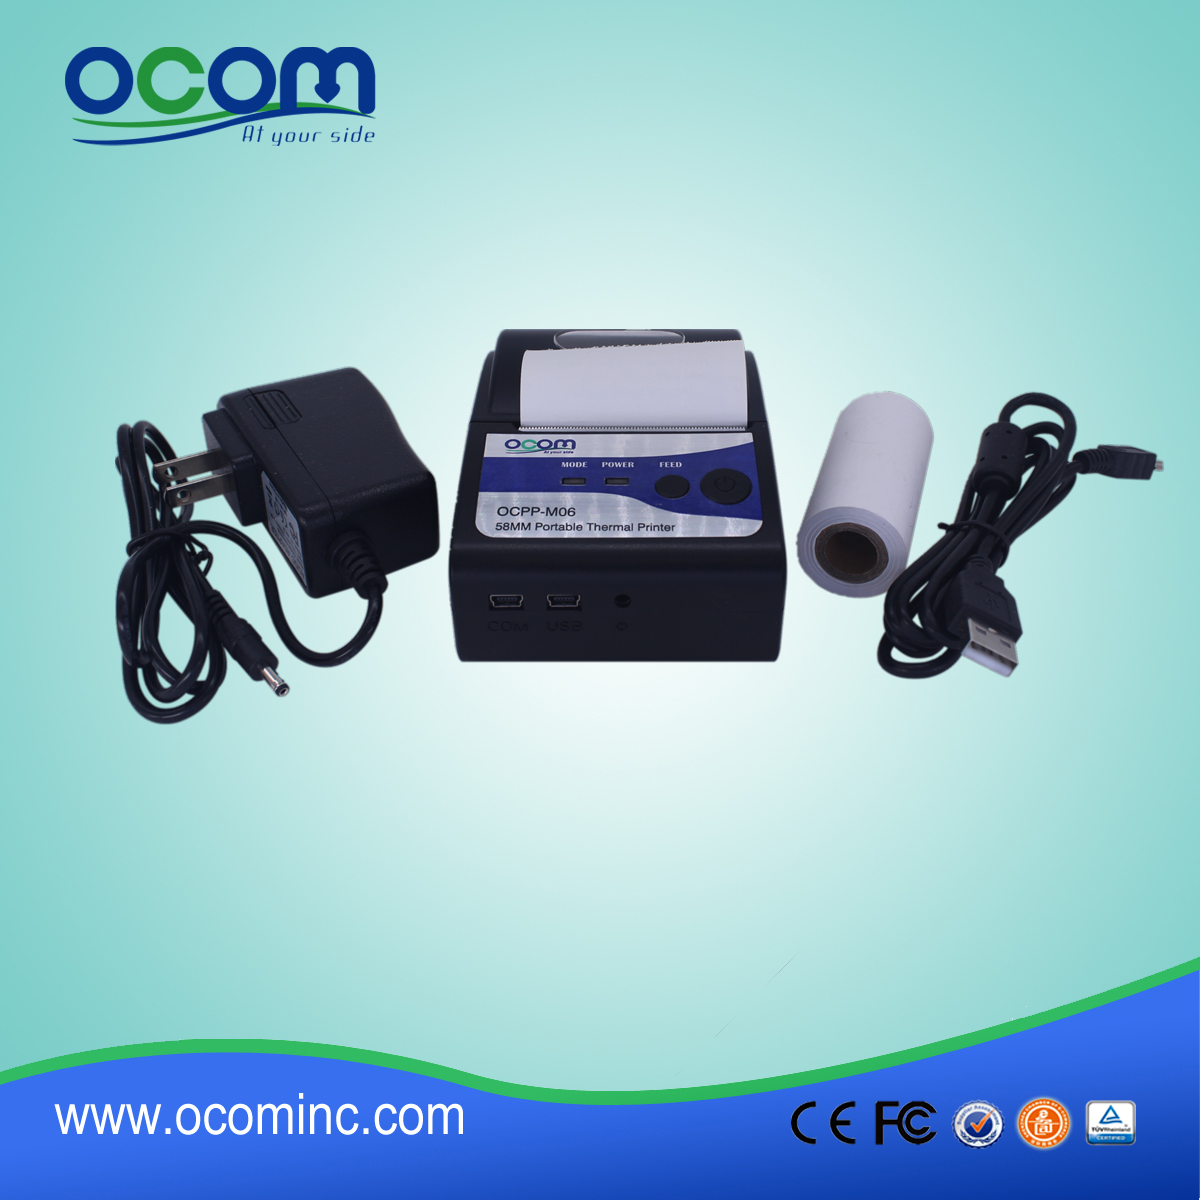 (OCPP-M06) OCOM ζεστό πώλησης εκτυπωτή φθηνά android pos, pos εκτυπωτή android